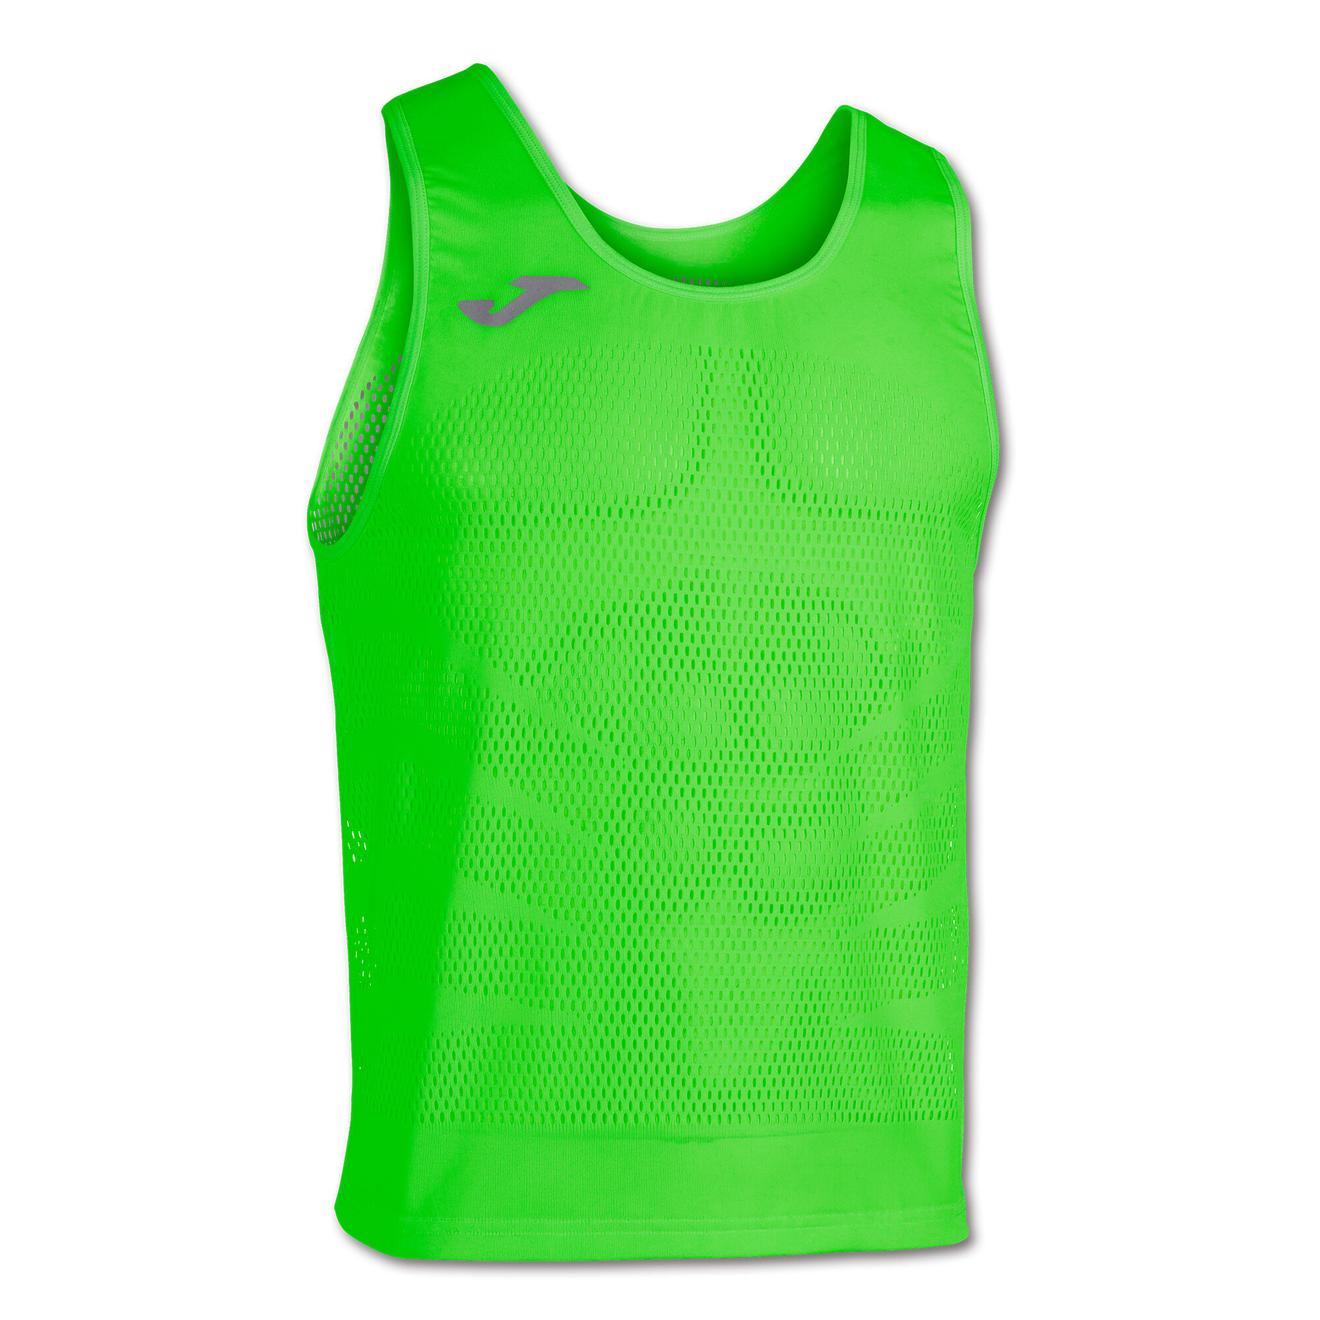 Oferta de Camiseta tirantes hombre Marathon verde flúor por $299.5 en Joma